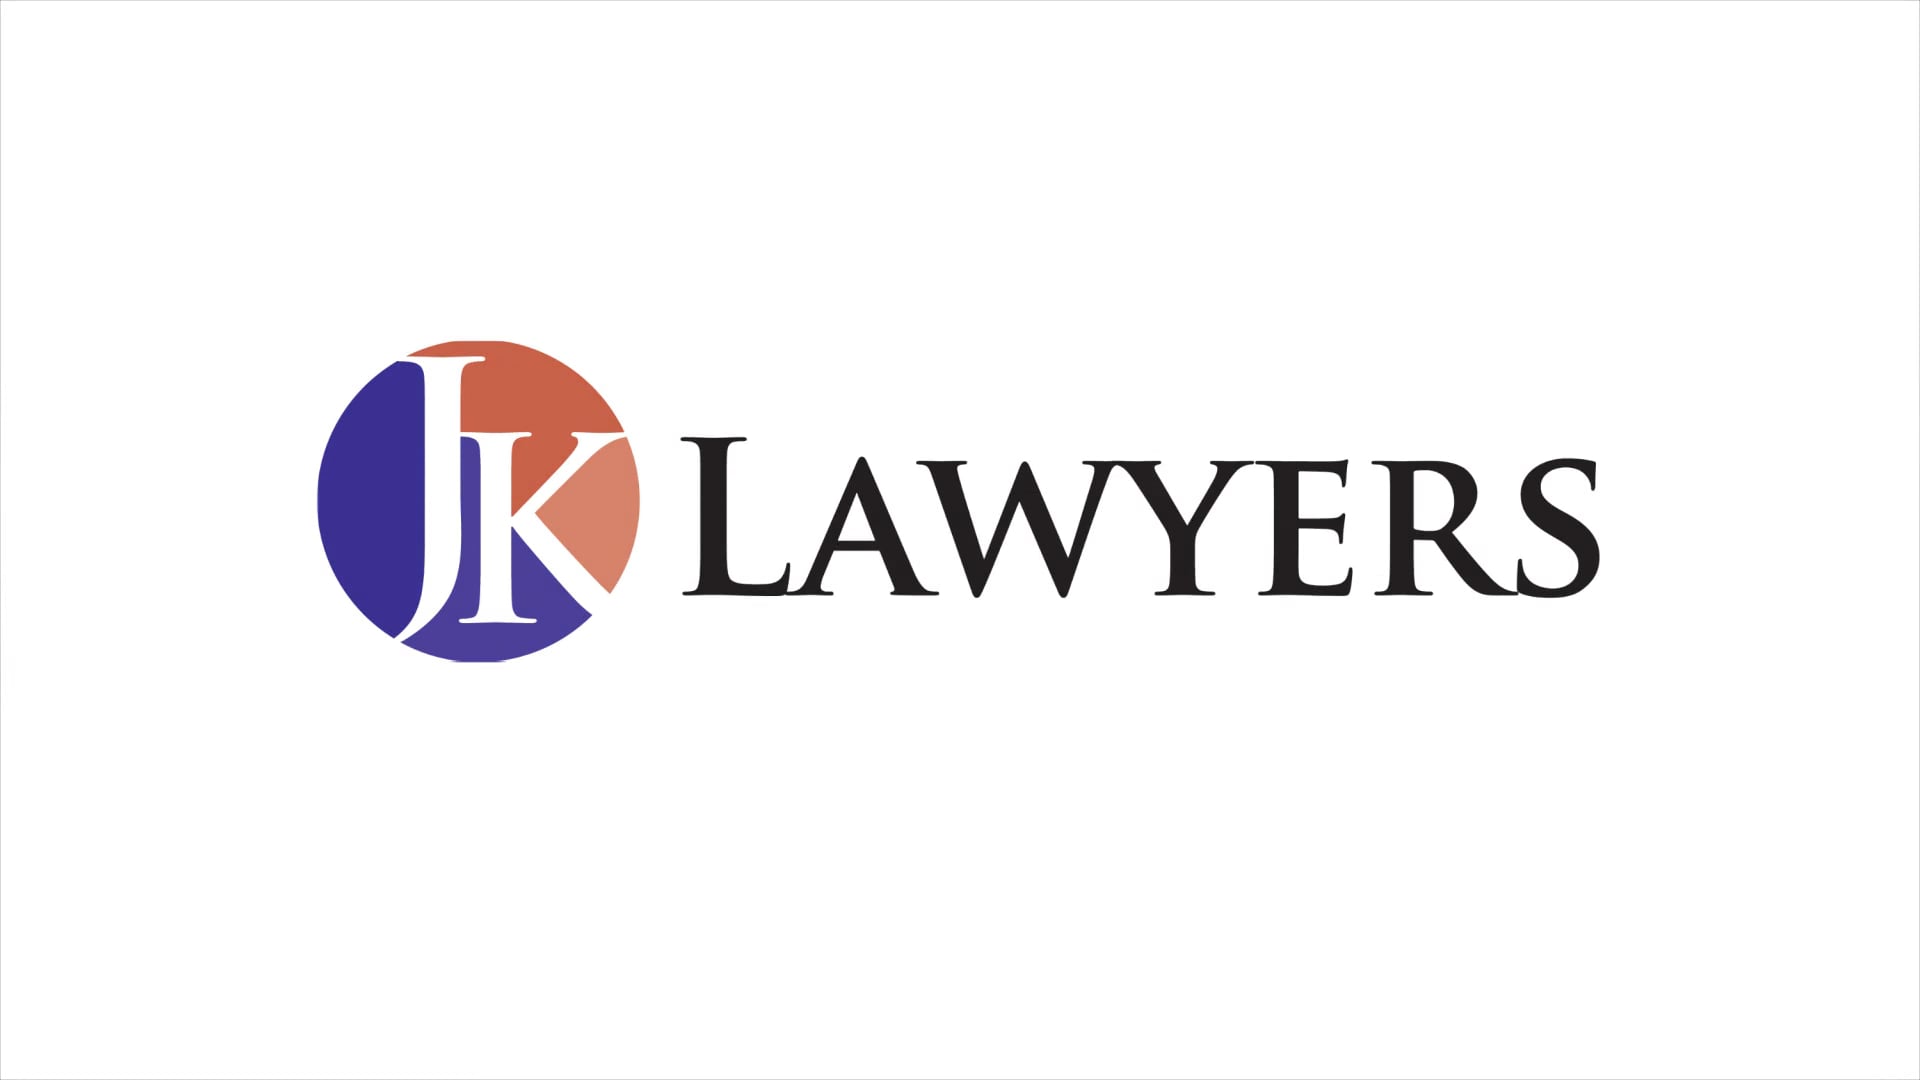 JK Lawyers Corporate Video